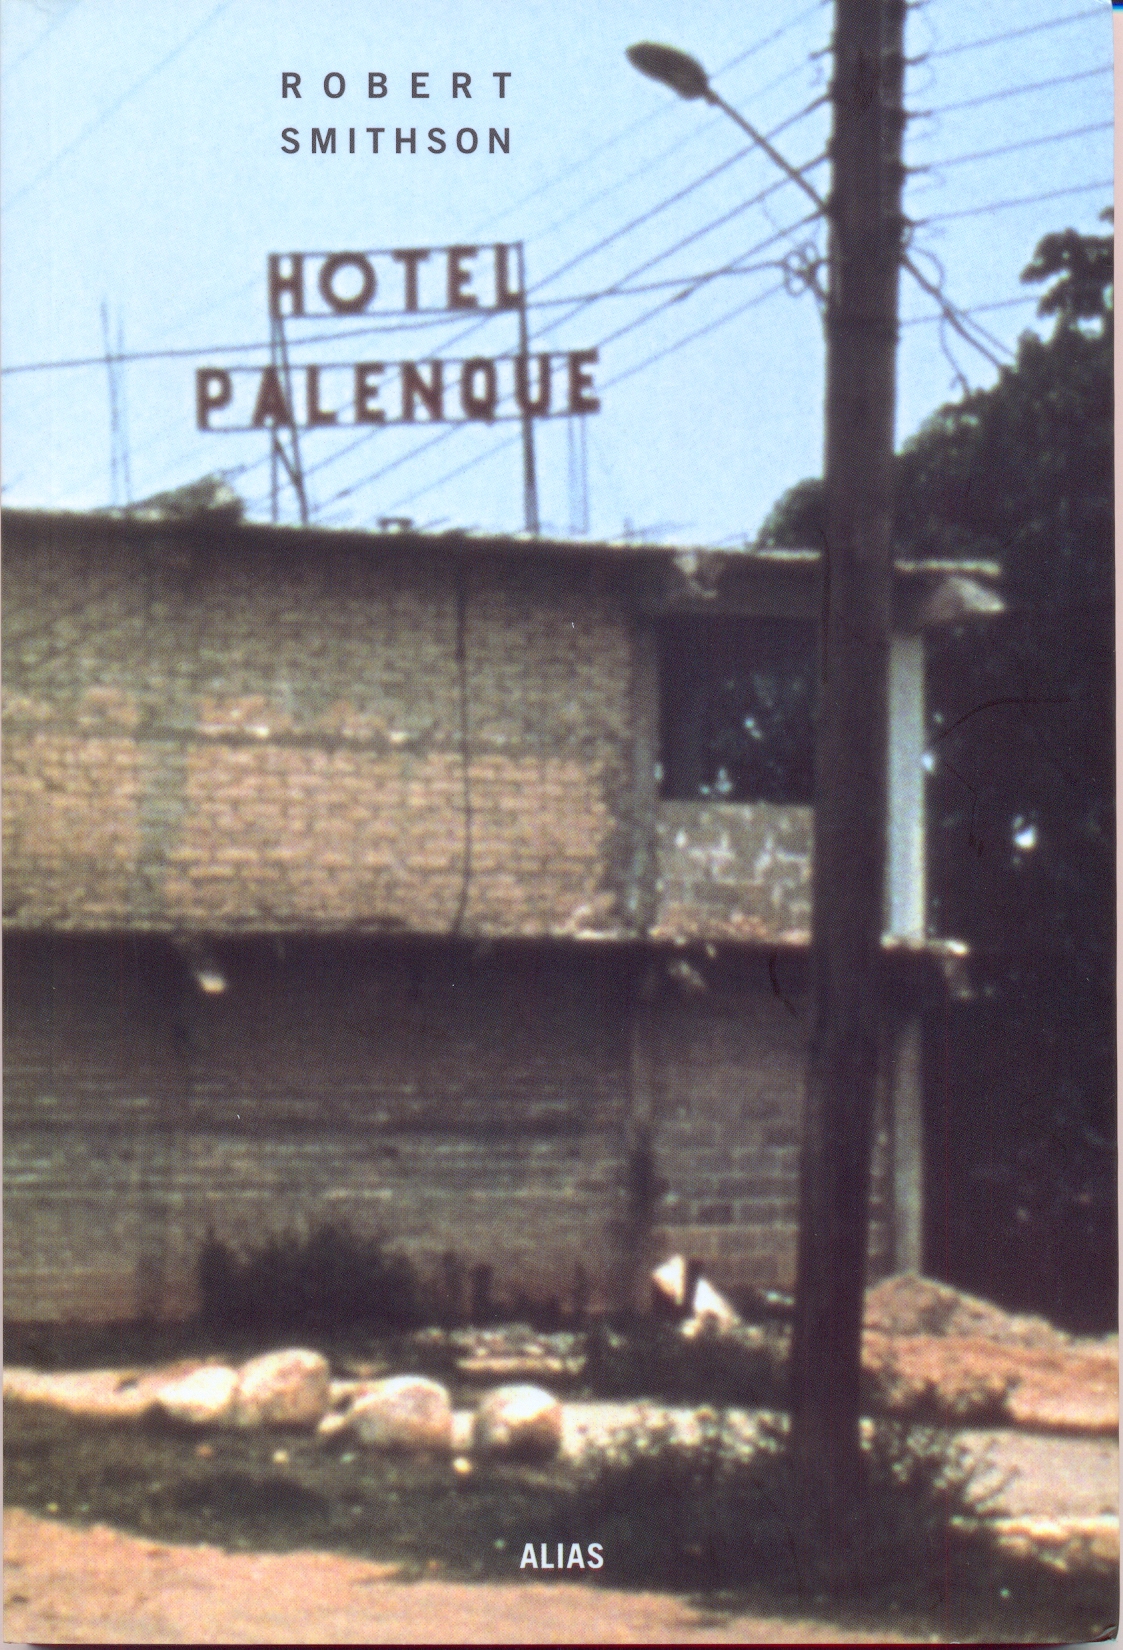 Hotel palenque